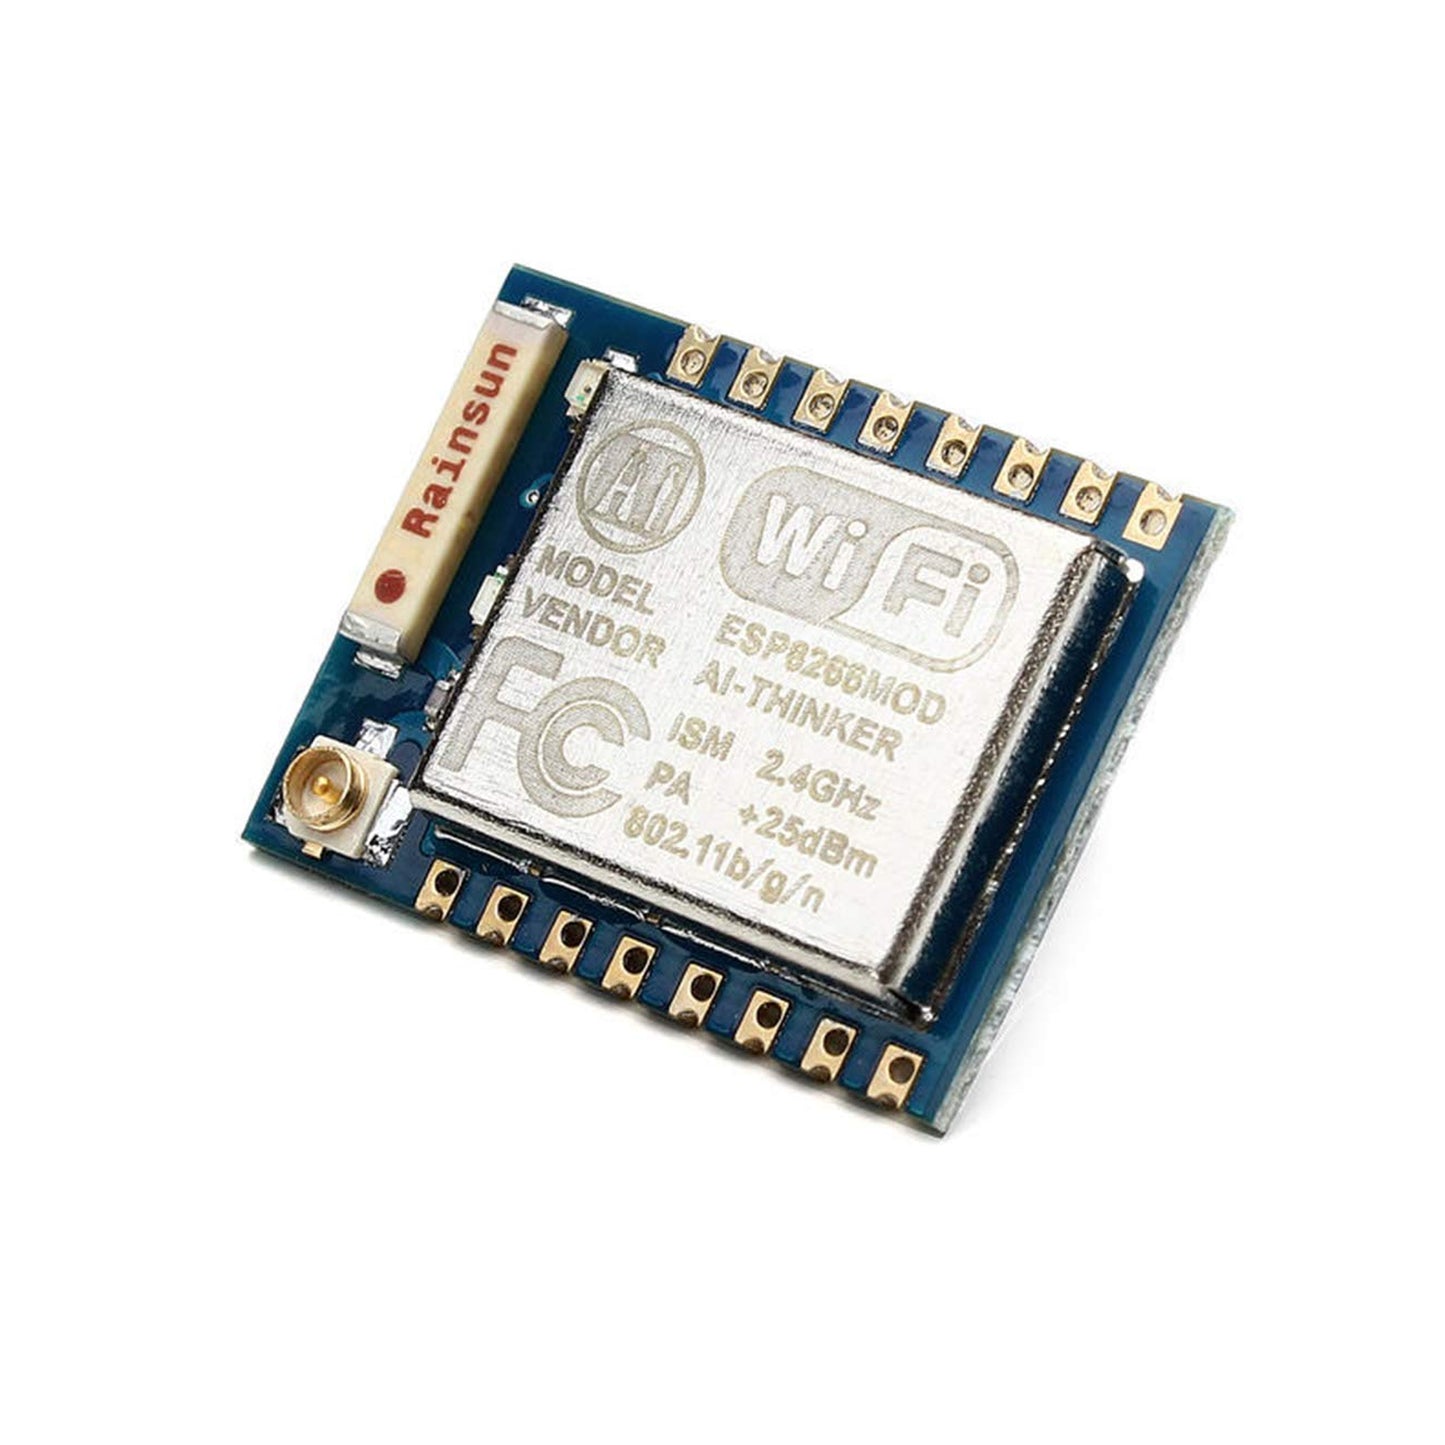 Ai-Thinker ESP-07 ESP8266 Serial WIFI Module Wireless Transceiver Module ESP-07 Send Receive LWIP AP+STA - AB062/RS5614 - REES52